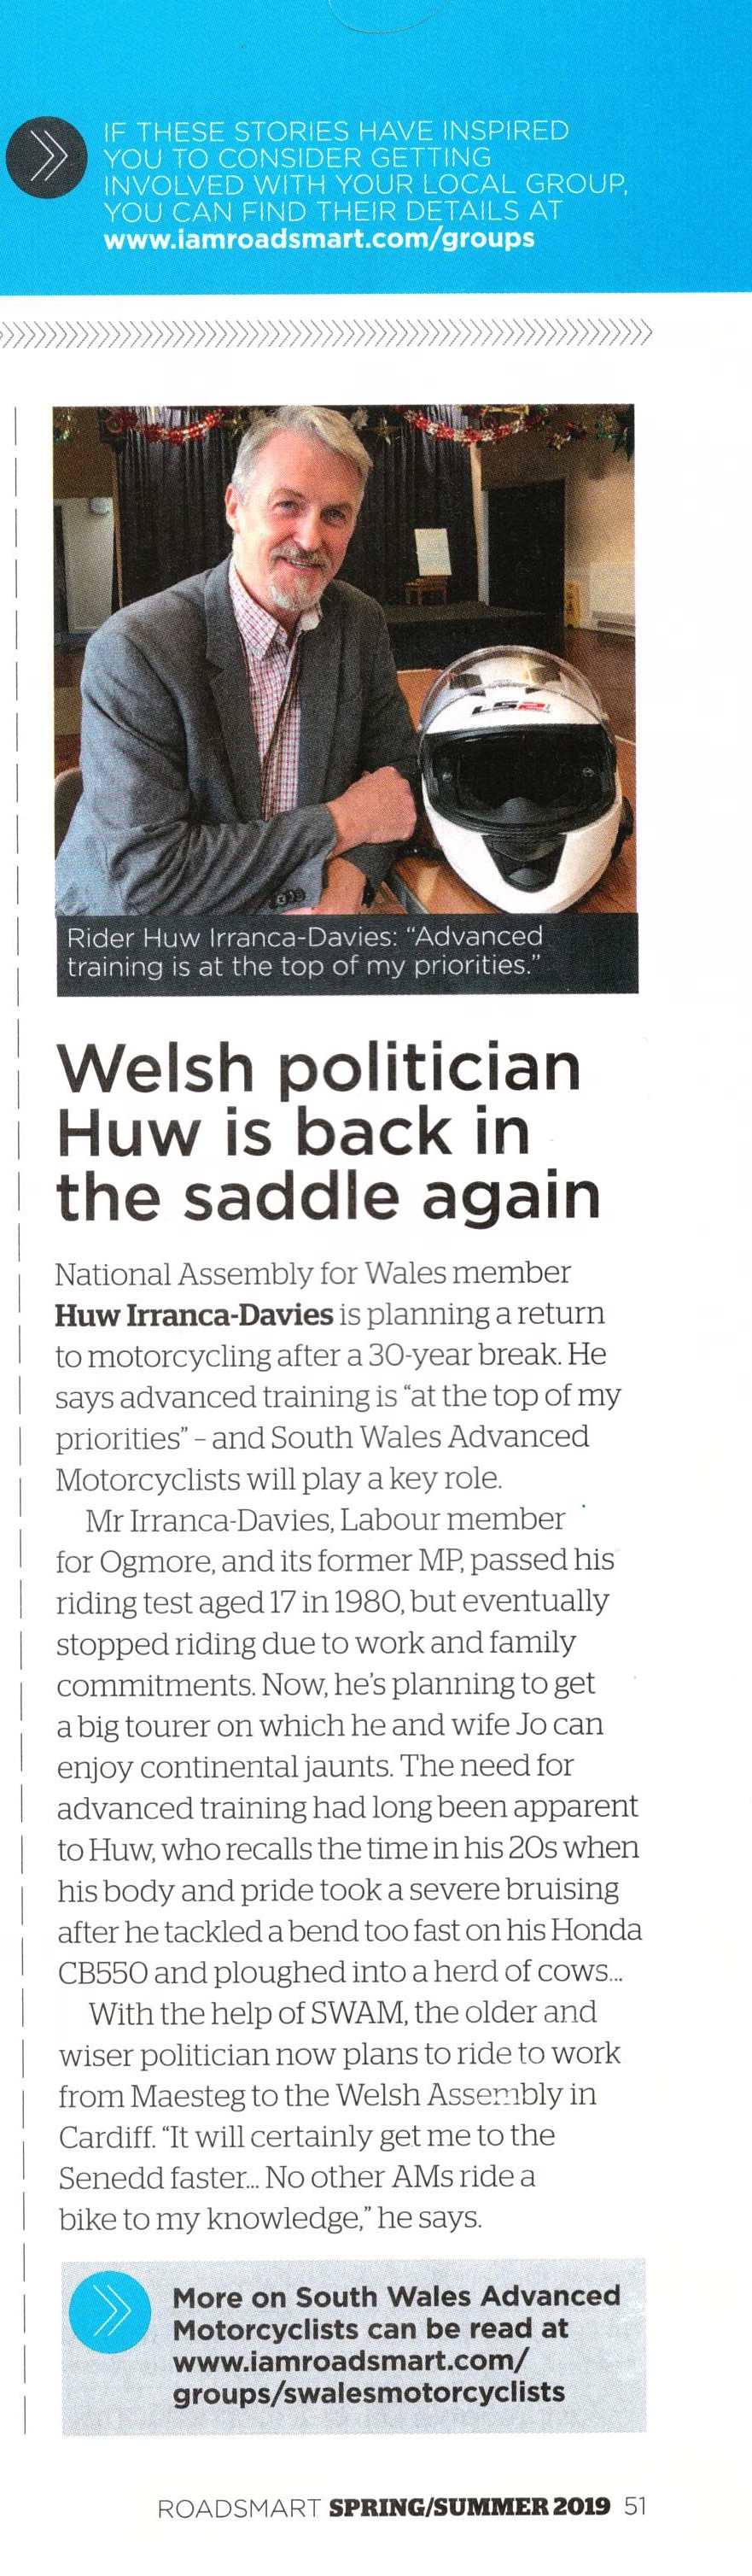 Article-Huw Irranca-Davies in saddle